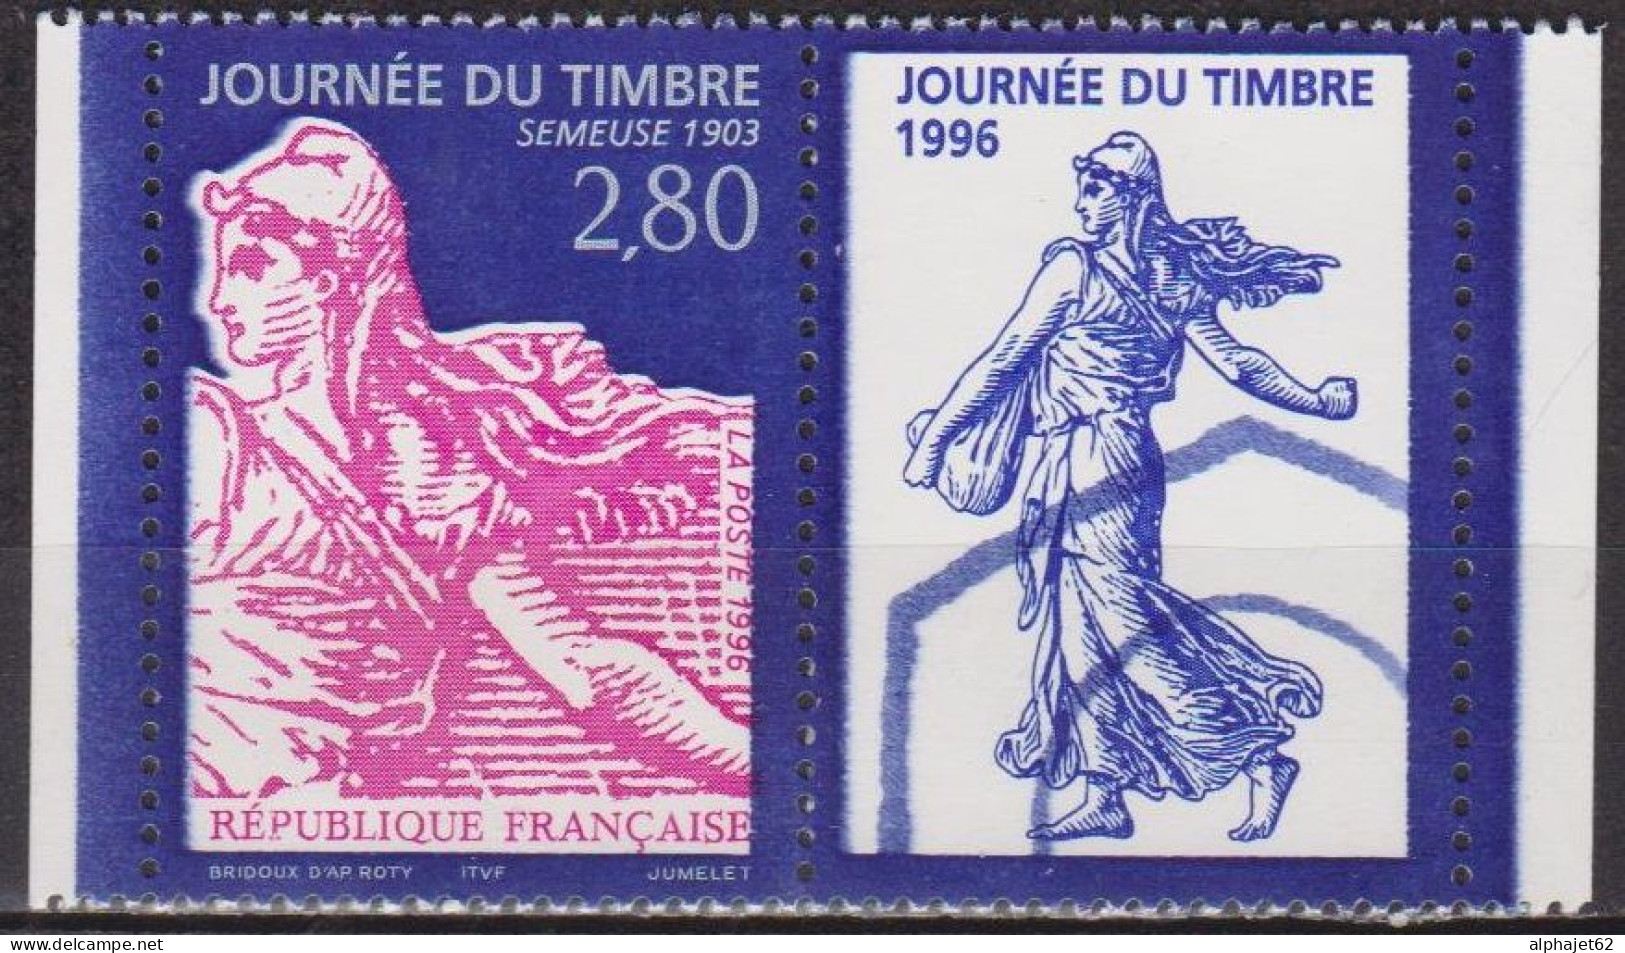 Journée Du Timbre, Type Semeuse 1903 - FRANCE - N° 2991 A ** - 1996 - Nuovi